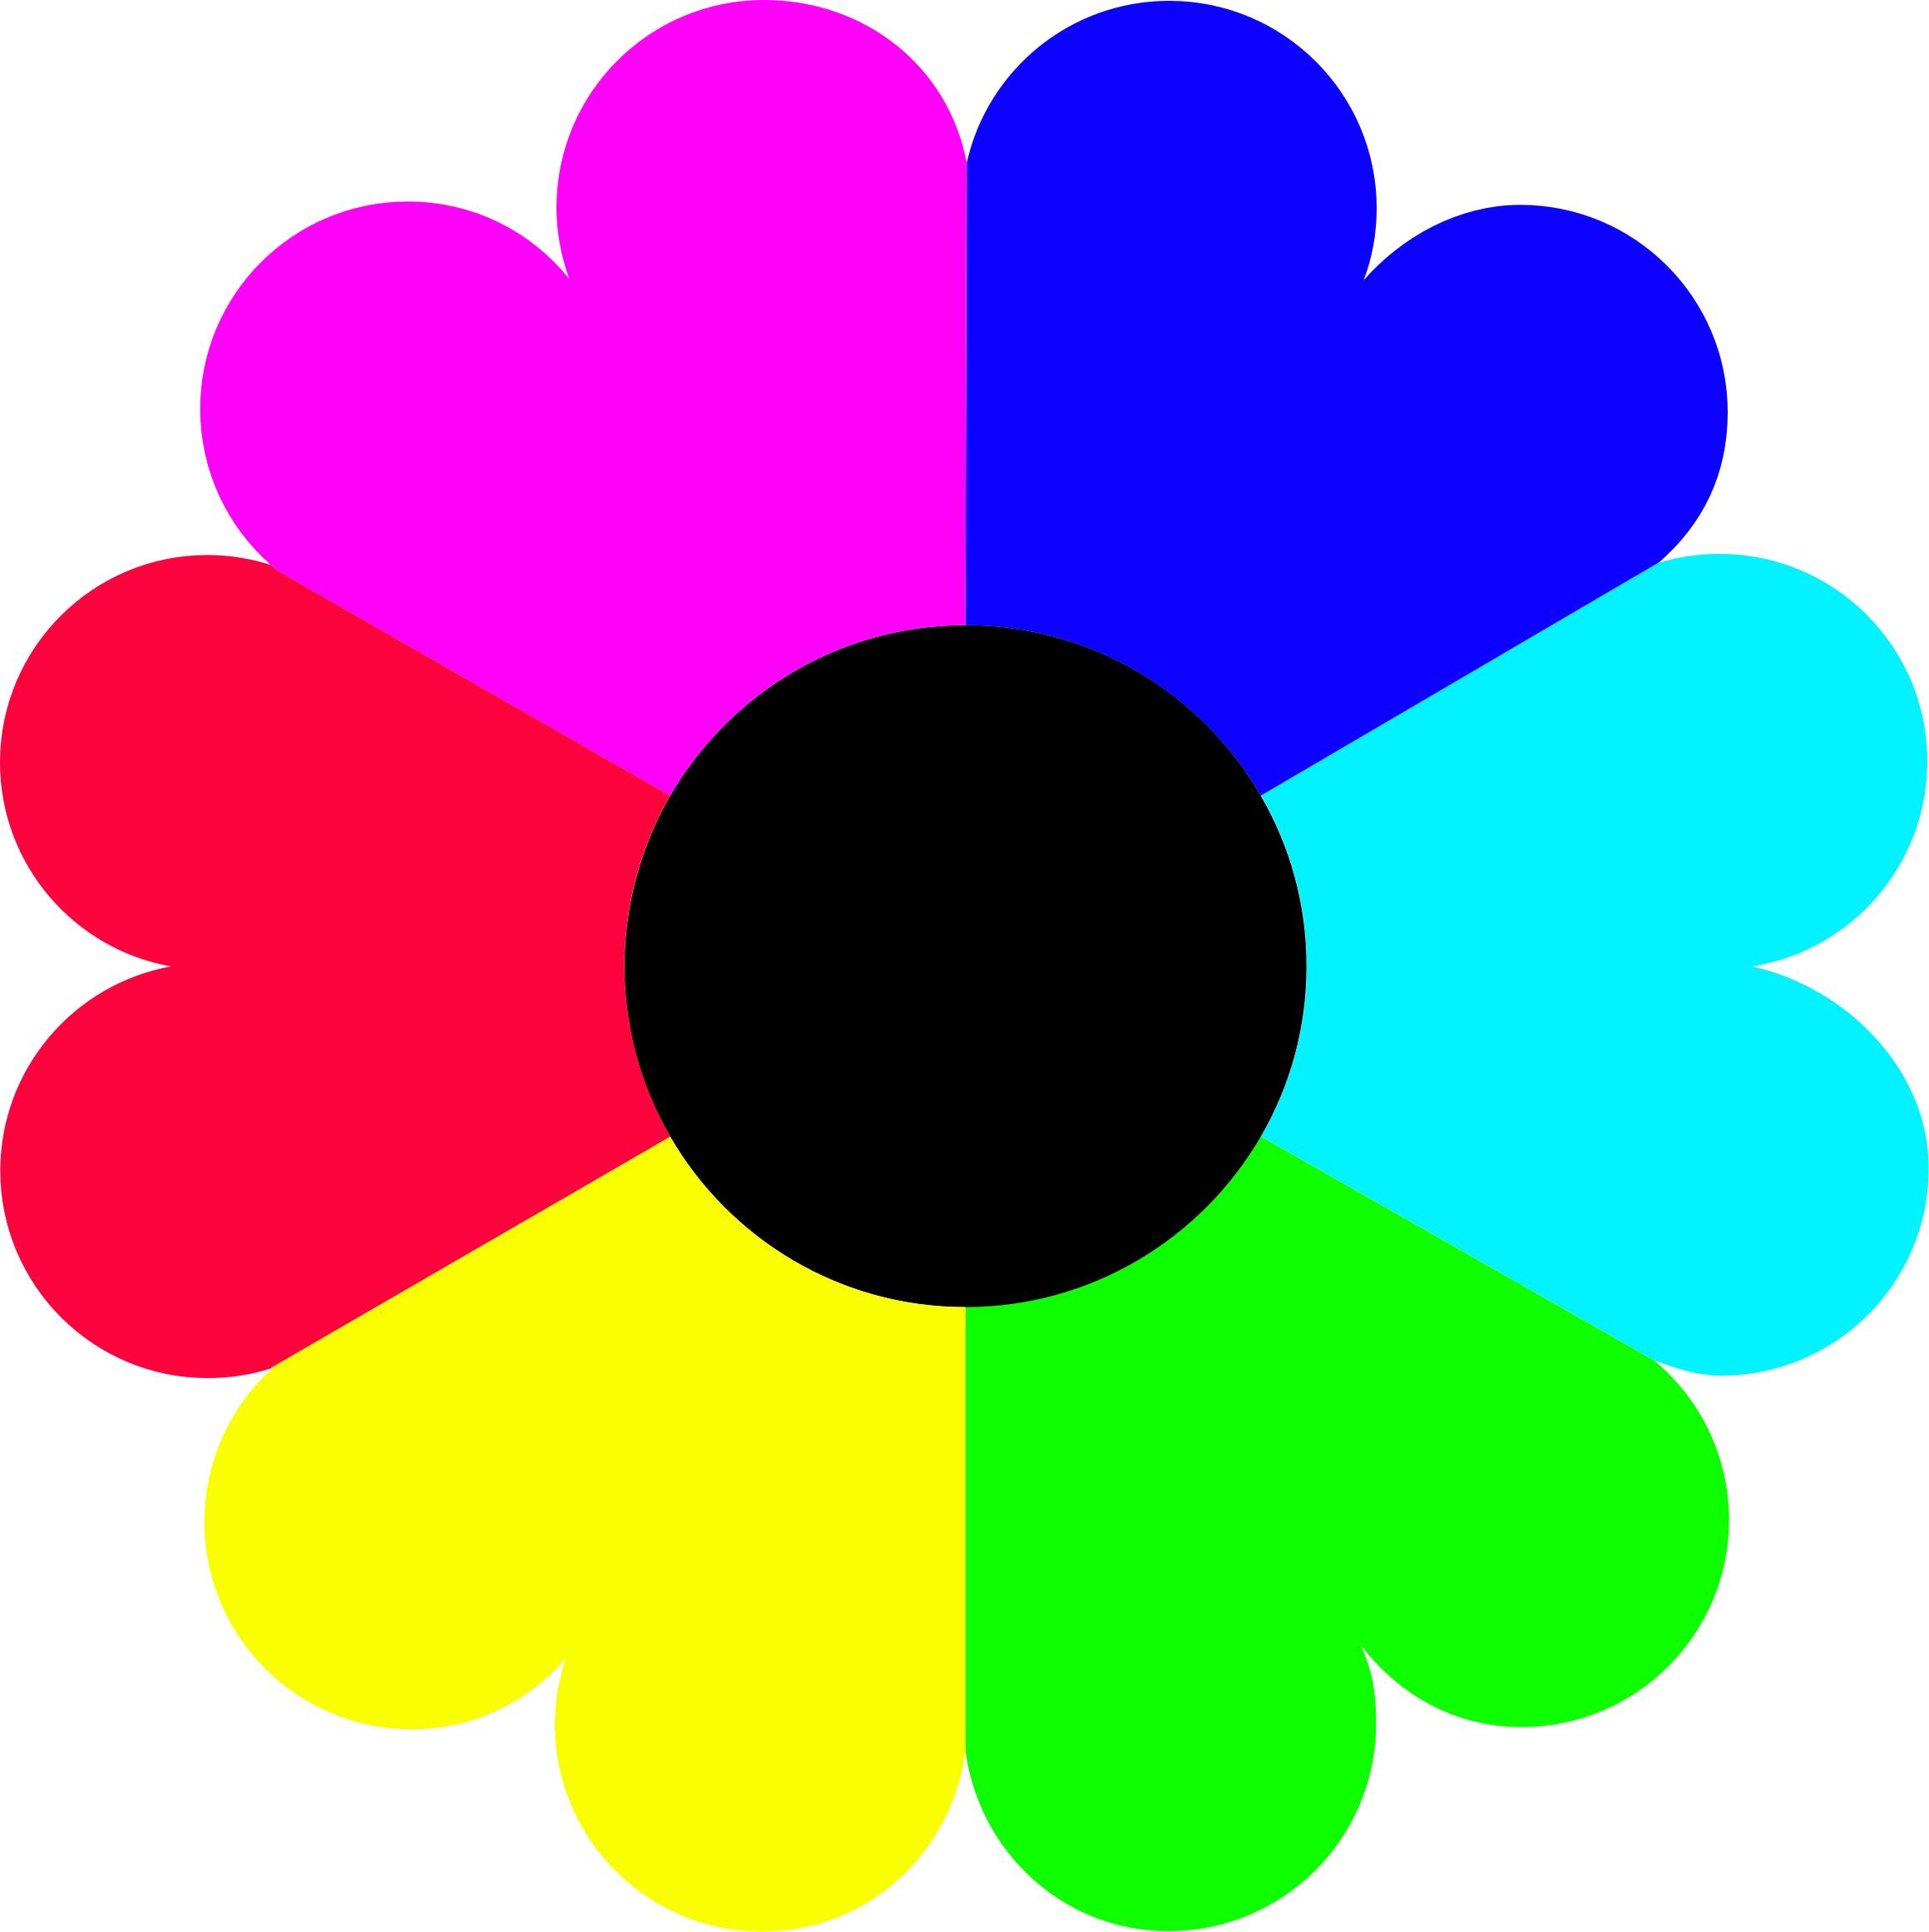 Flower 7 colors png